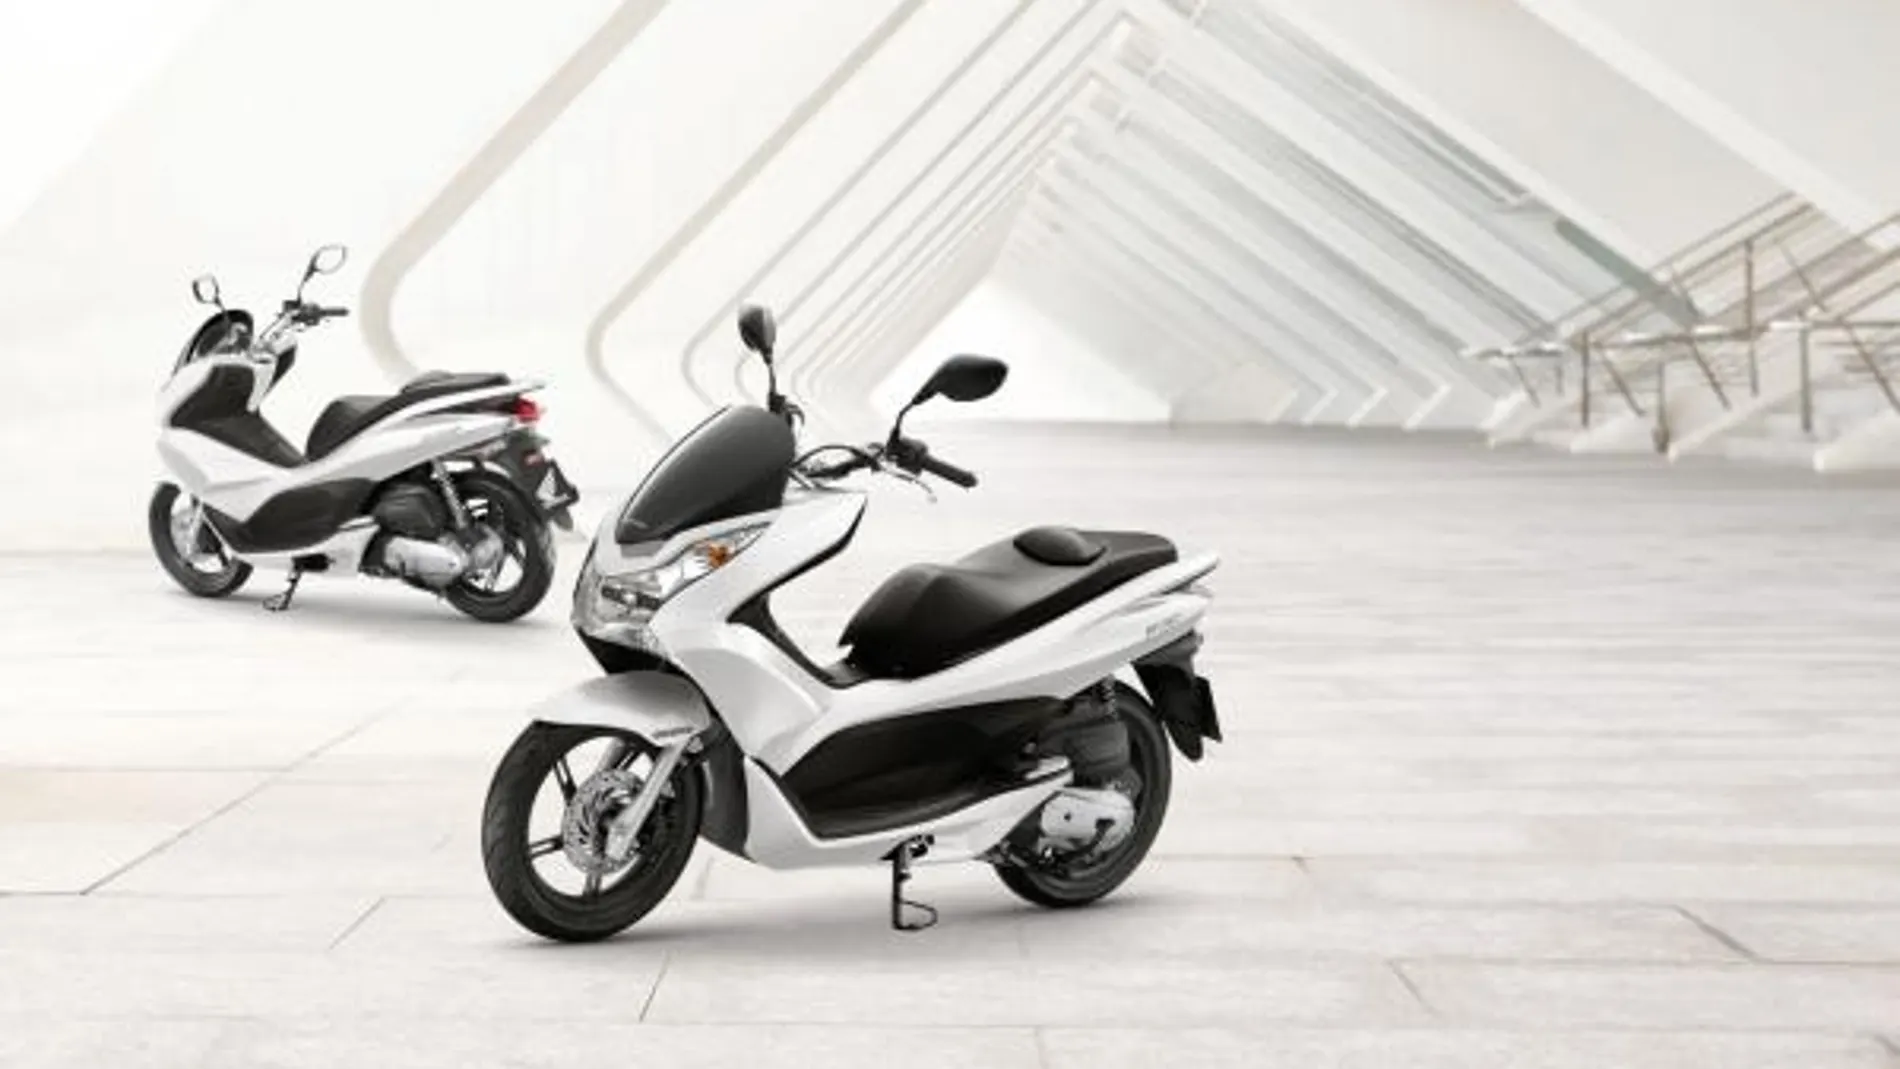 Honda da un giro a sus modelos con el nuevo scooter PCX